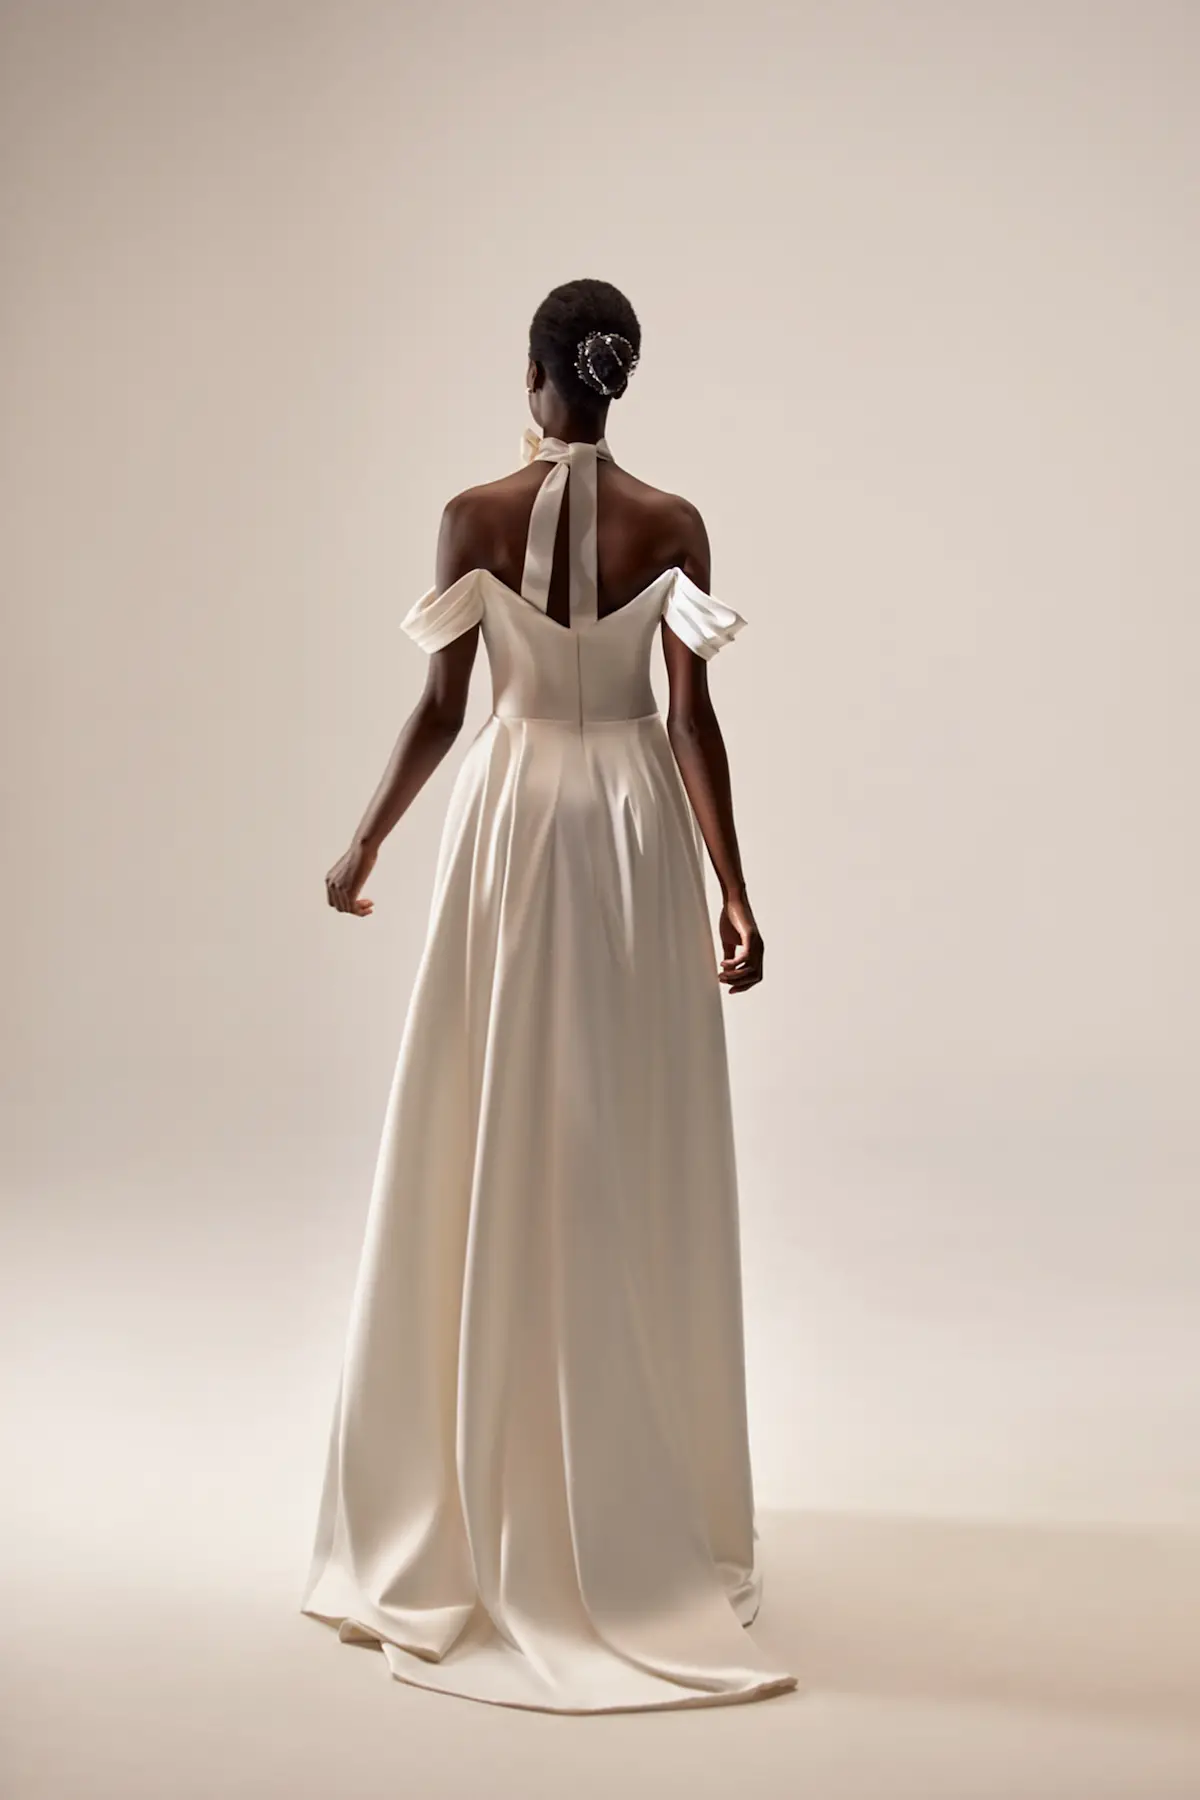 Vintage simple Wedding Dress by Milla Nova - Lara white lace